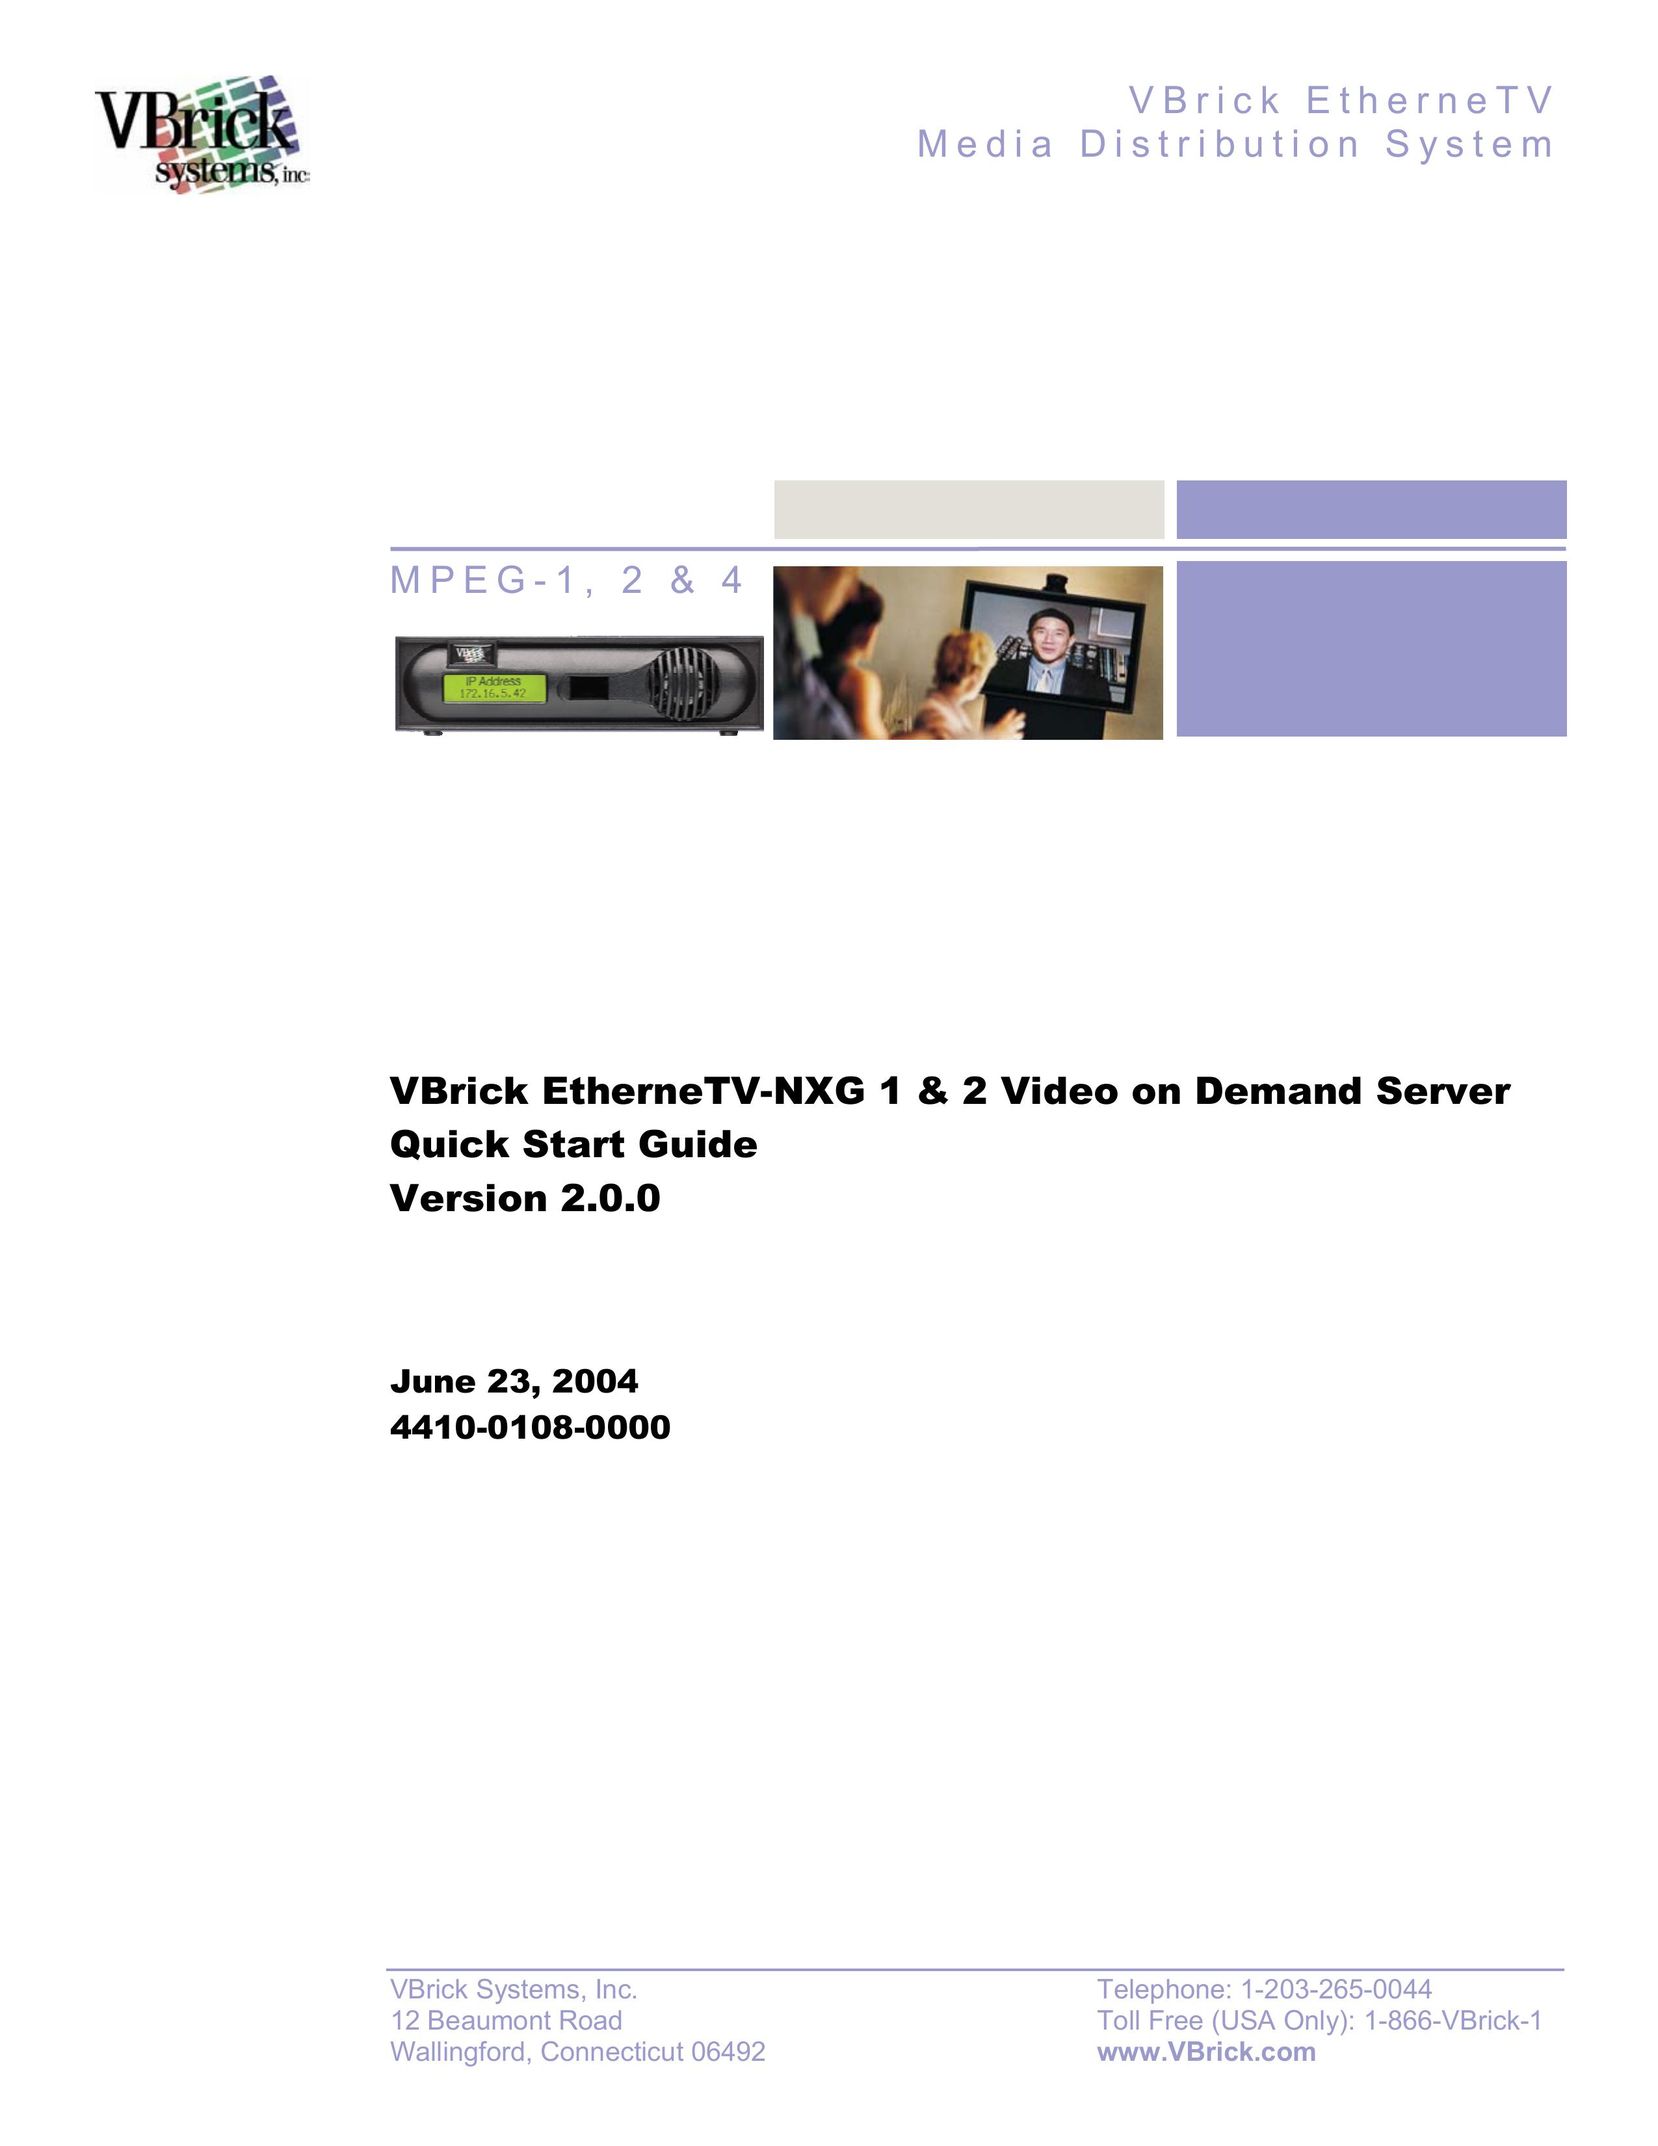 VBrick Systems EtherneTV-NXG 1 Home Theater Server User Manual